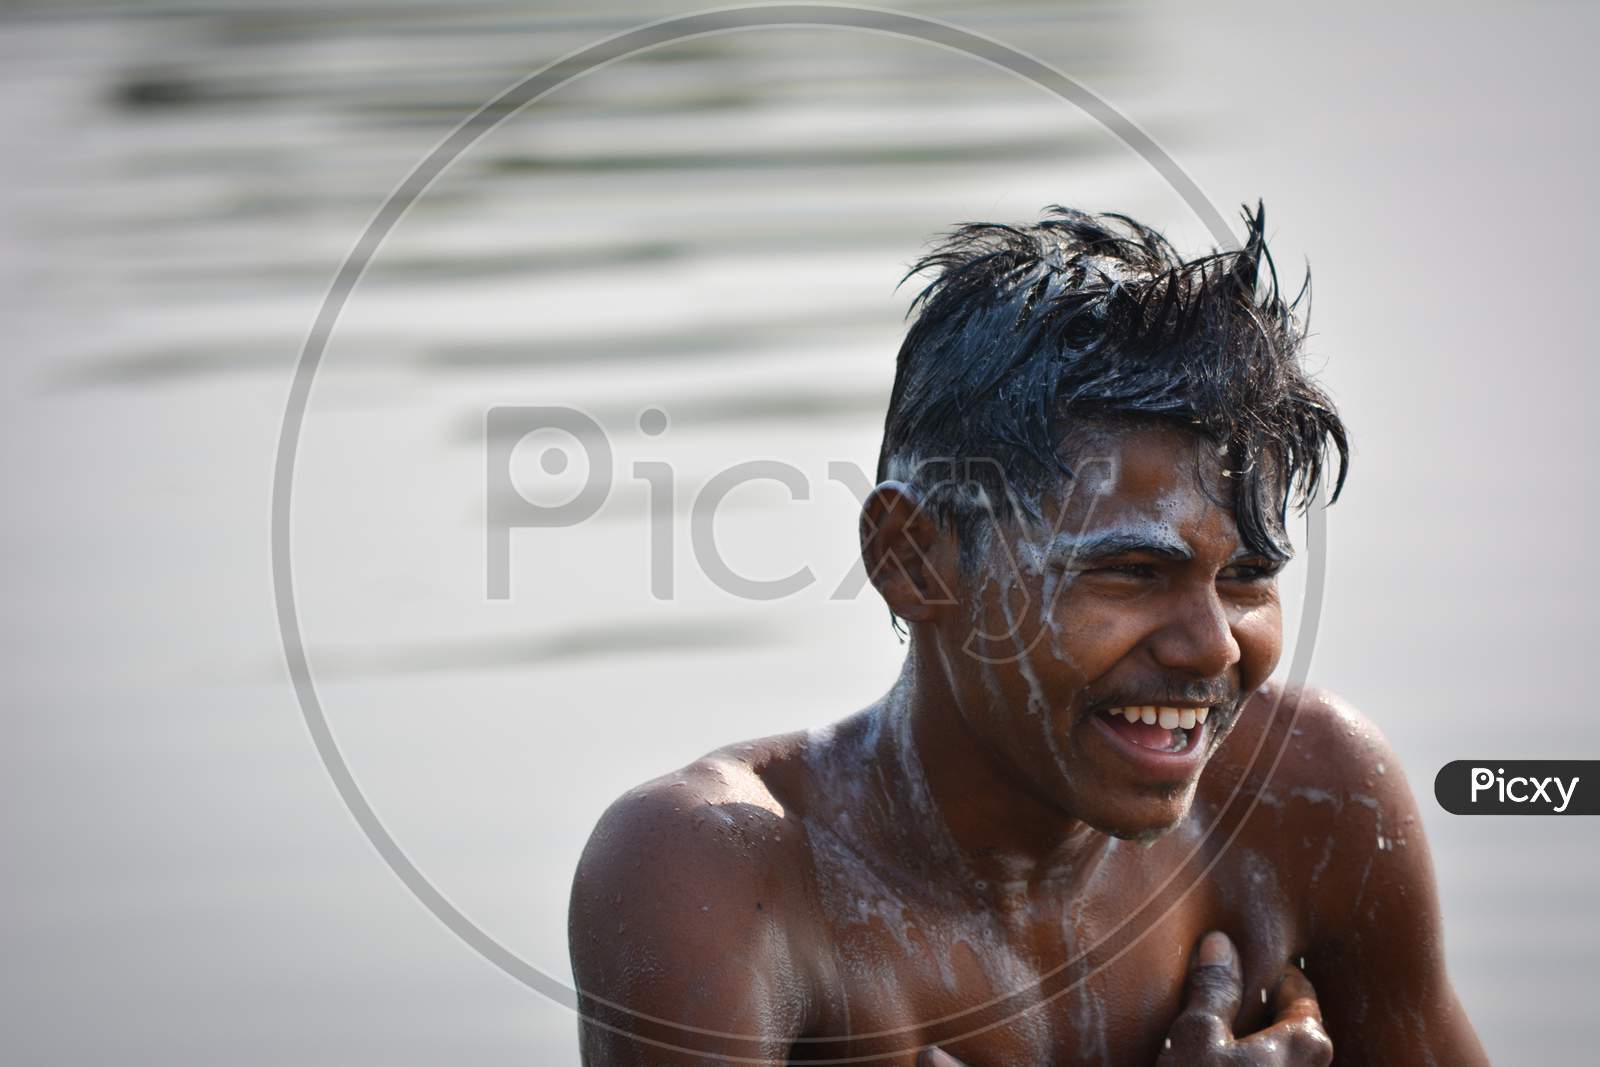 TIKAMGARH, MADHYA PRADESH, INDIA - NOVEMBER 13, 2019: Indian village boy bathing in the river on morning, Washing body and hair with shampoo.